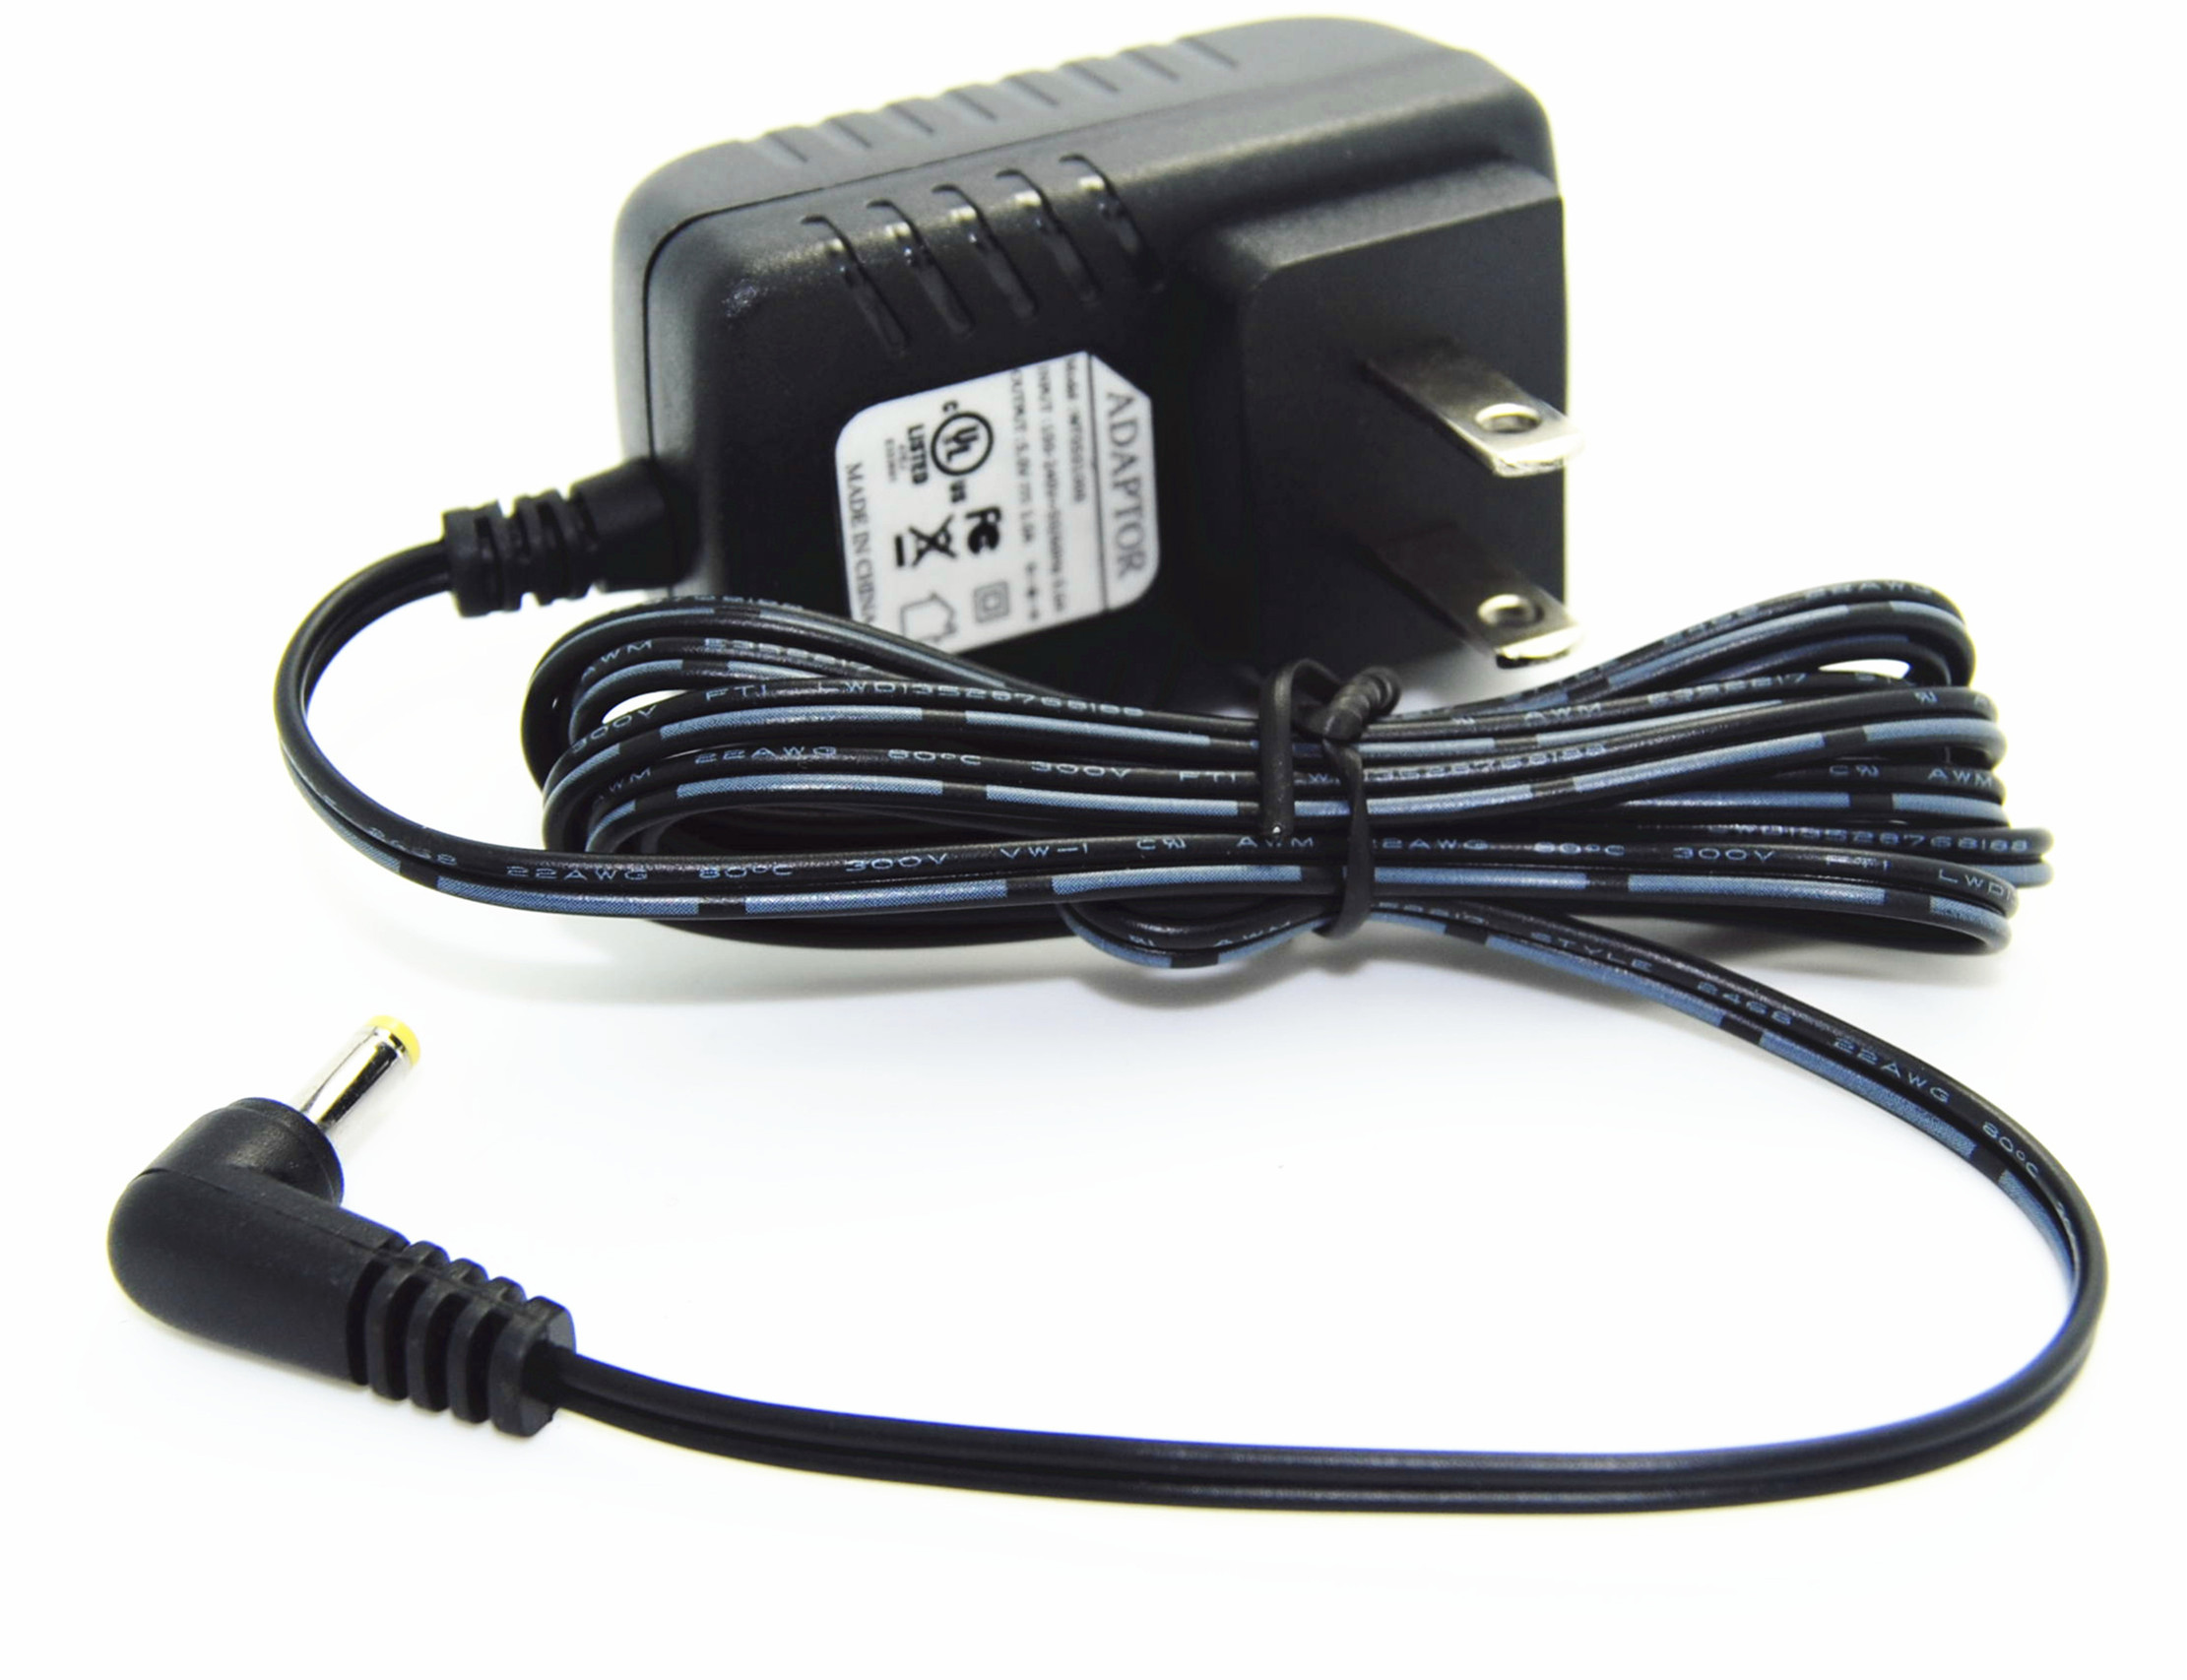 MP3 টি / LCD মনিটর জন্য Black স্মার্ট মার্কিন সকেট ওয়াল মাউন্ট পাওয়ার অ্যাডাপ্টার